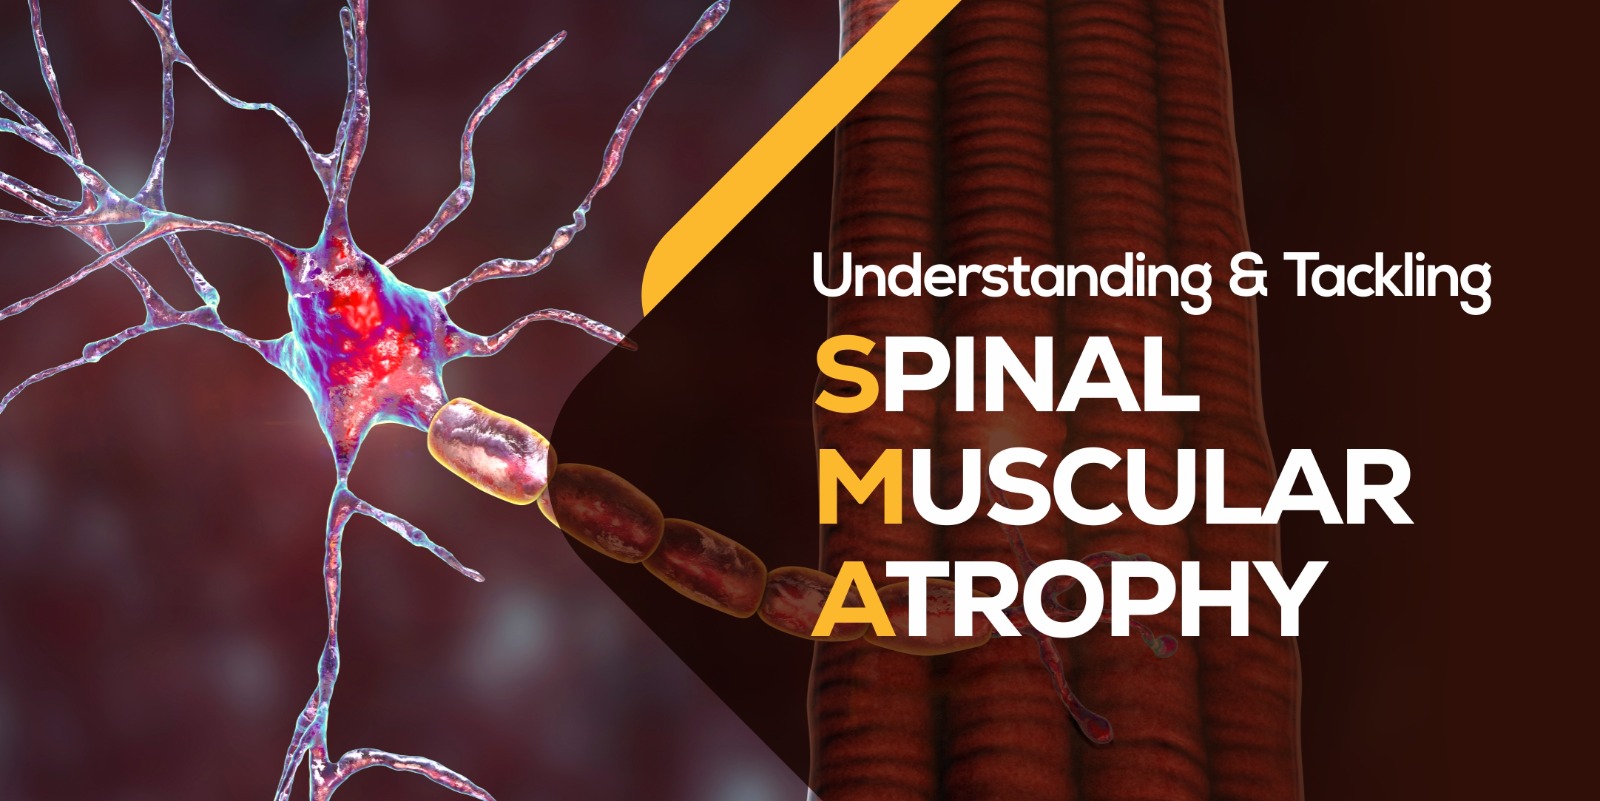 Understanding & Tackling Spinal Muscular Atrophy